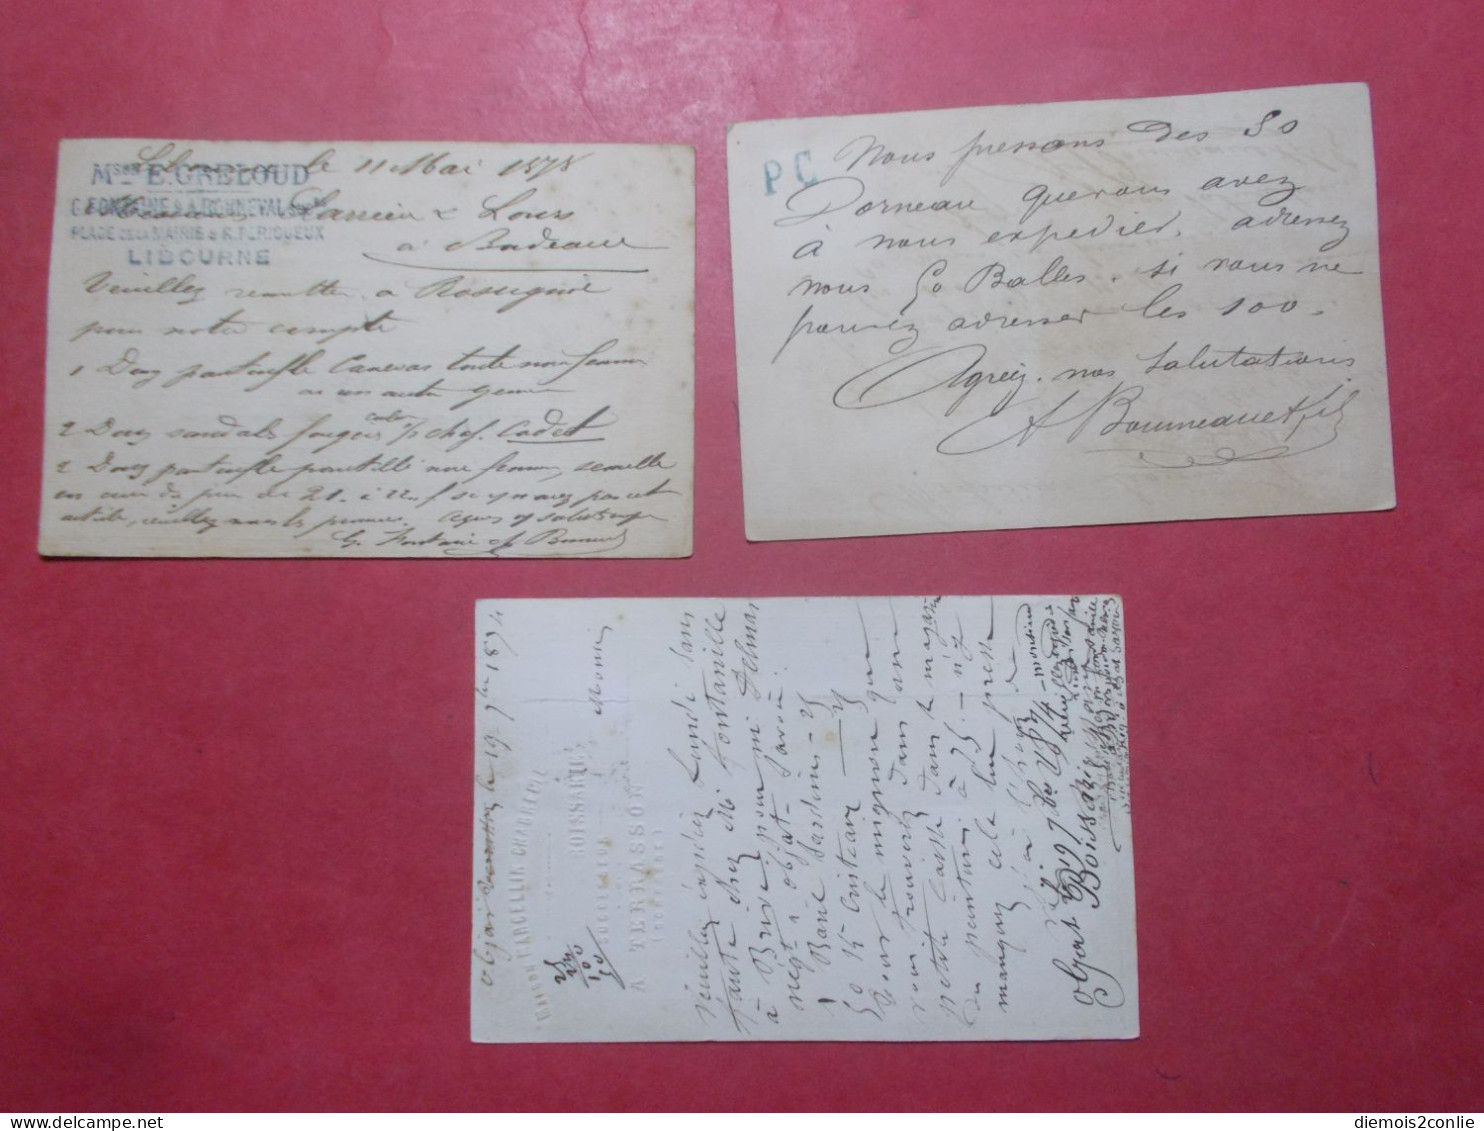 Marcophilie - Lot 3 Cartes Postales Pionnières Timbres Classiques (B342) - 1849-1876: Classic Period